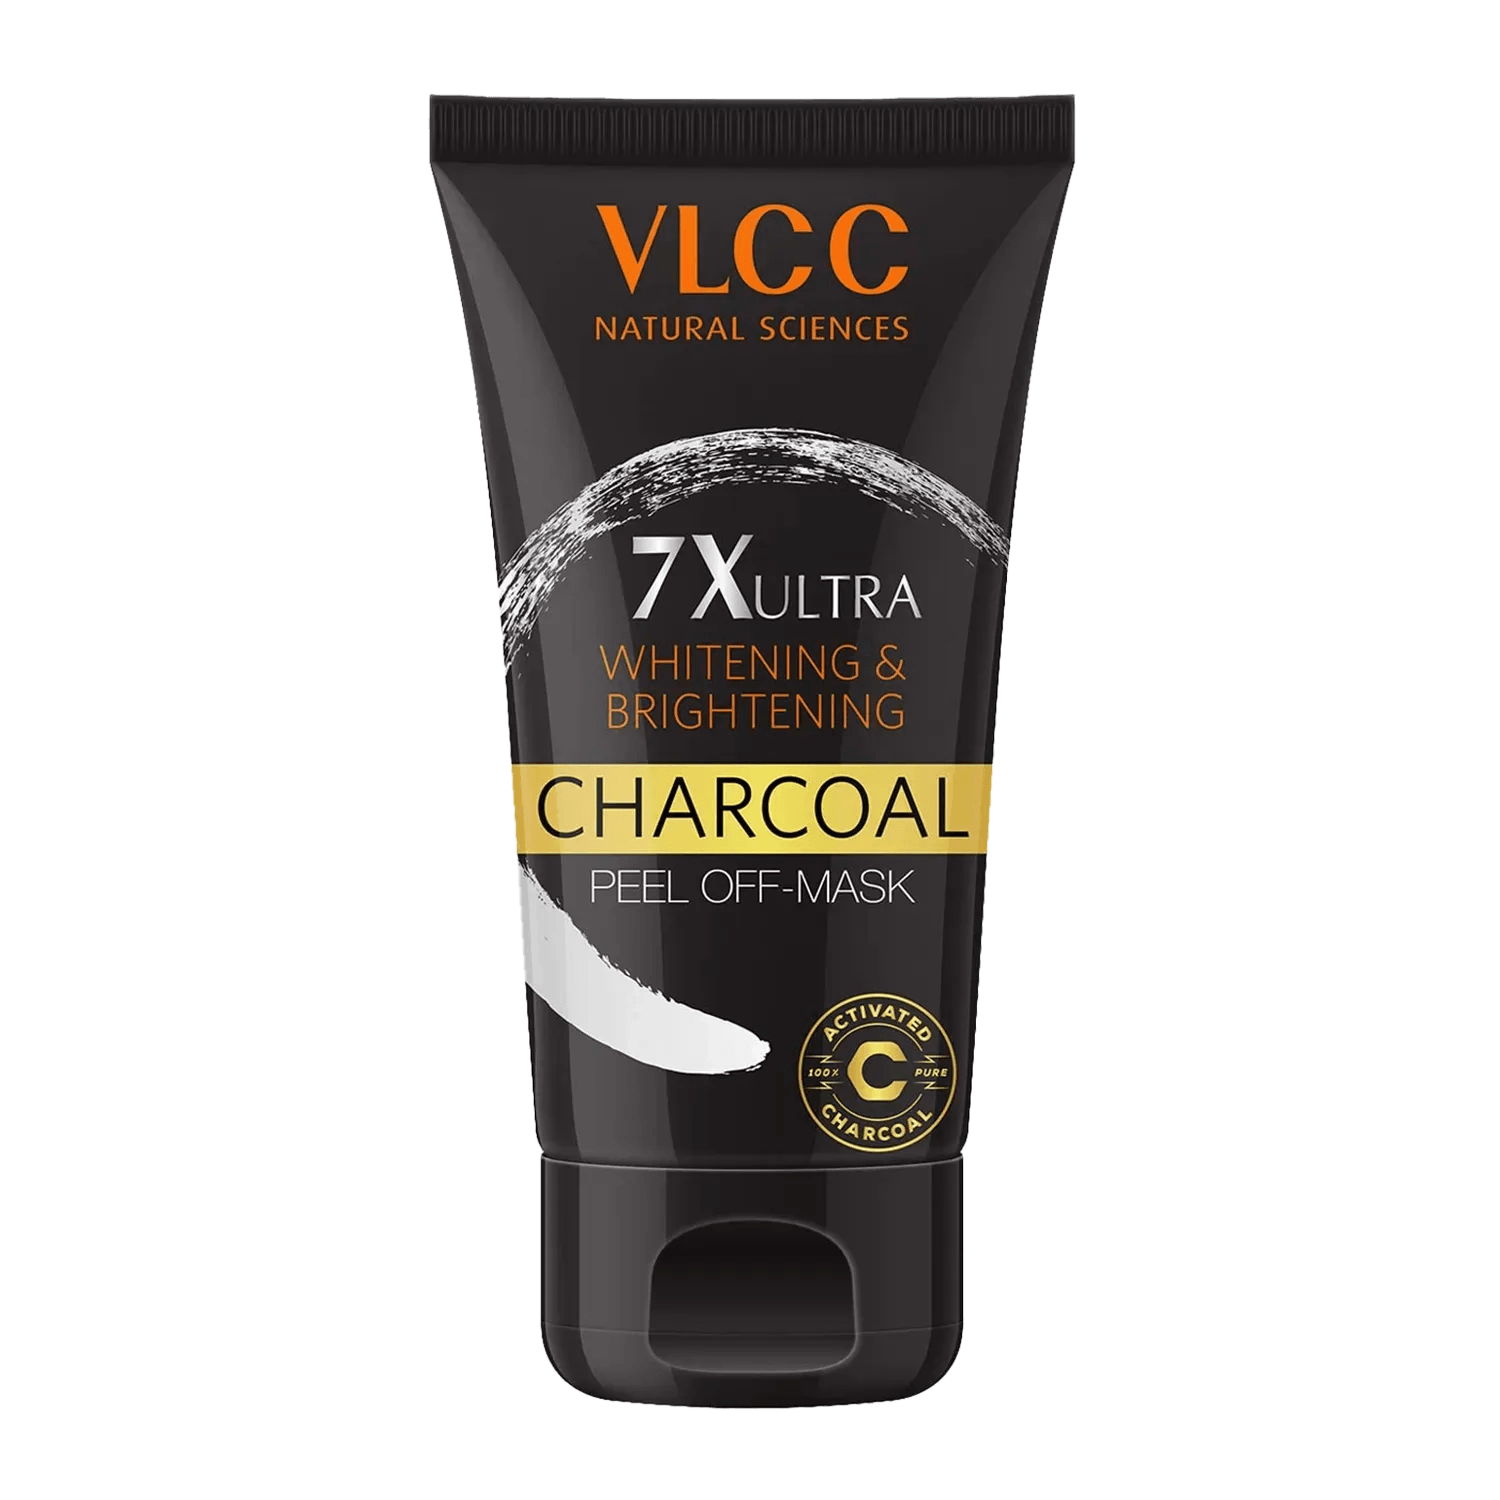 VLCC | VLCC 7X Ultra Whitening & Brightening Charcoal Peel Off Mask (100g)